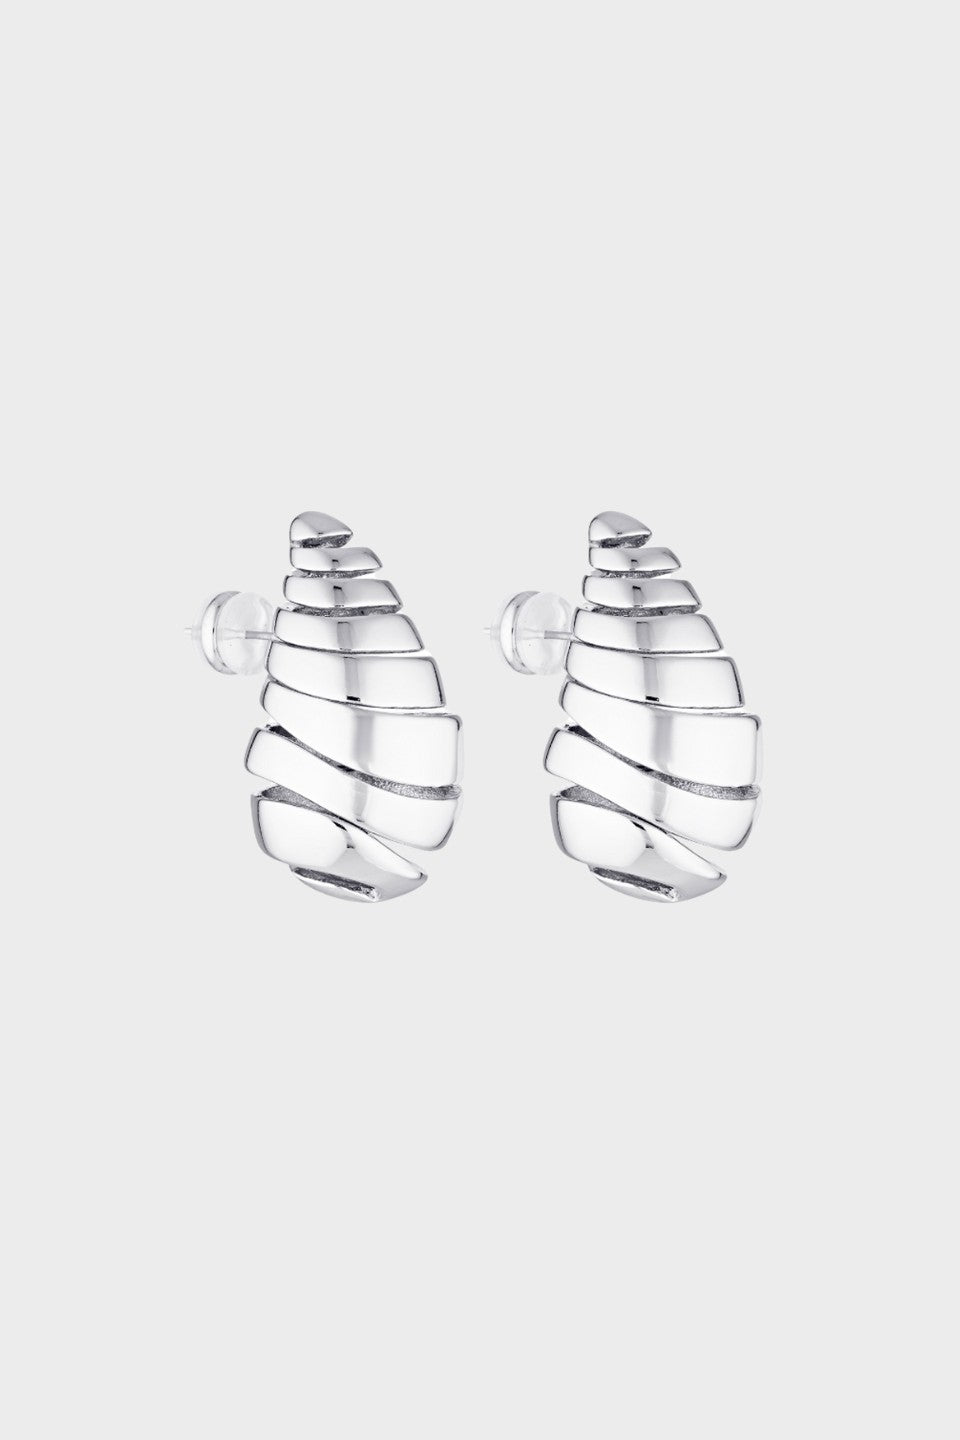 Blob Earrings - Spiral Silver